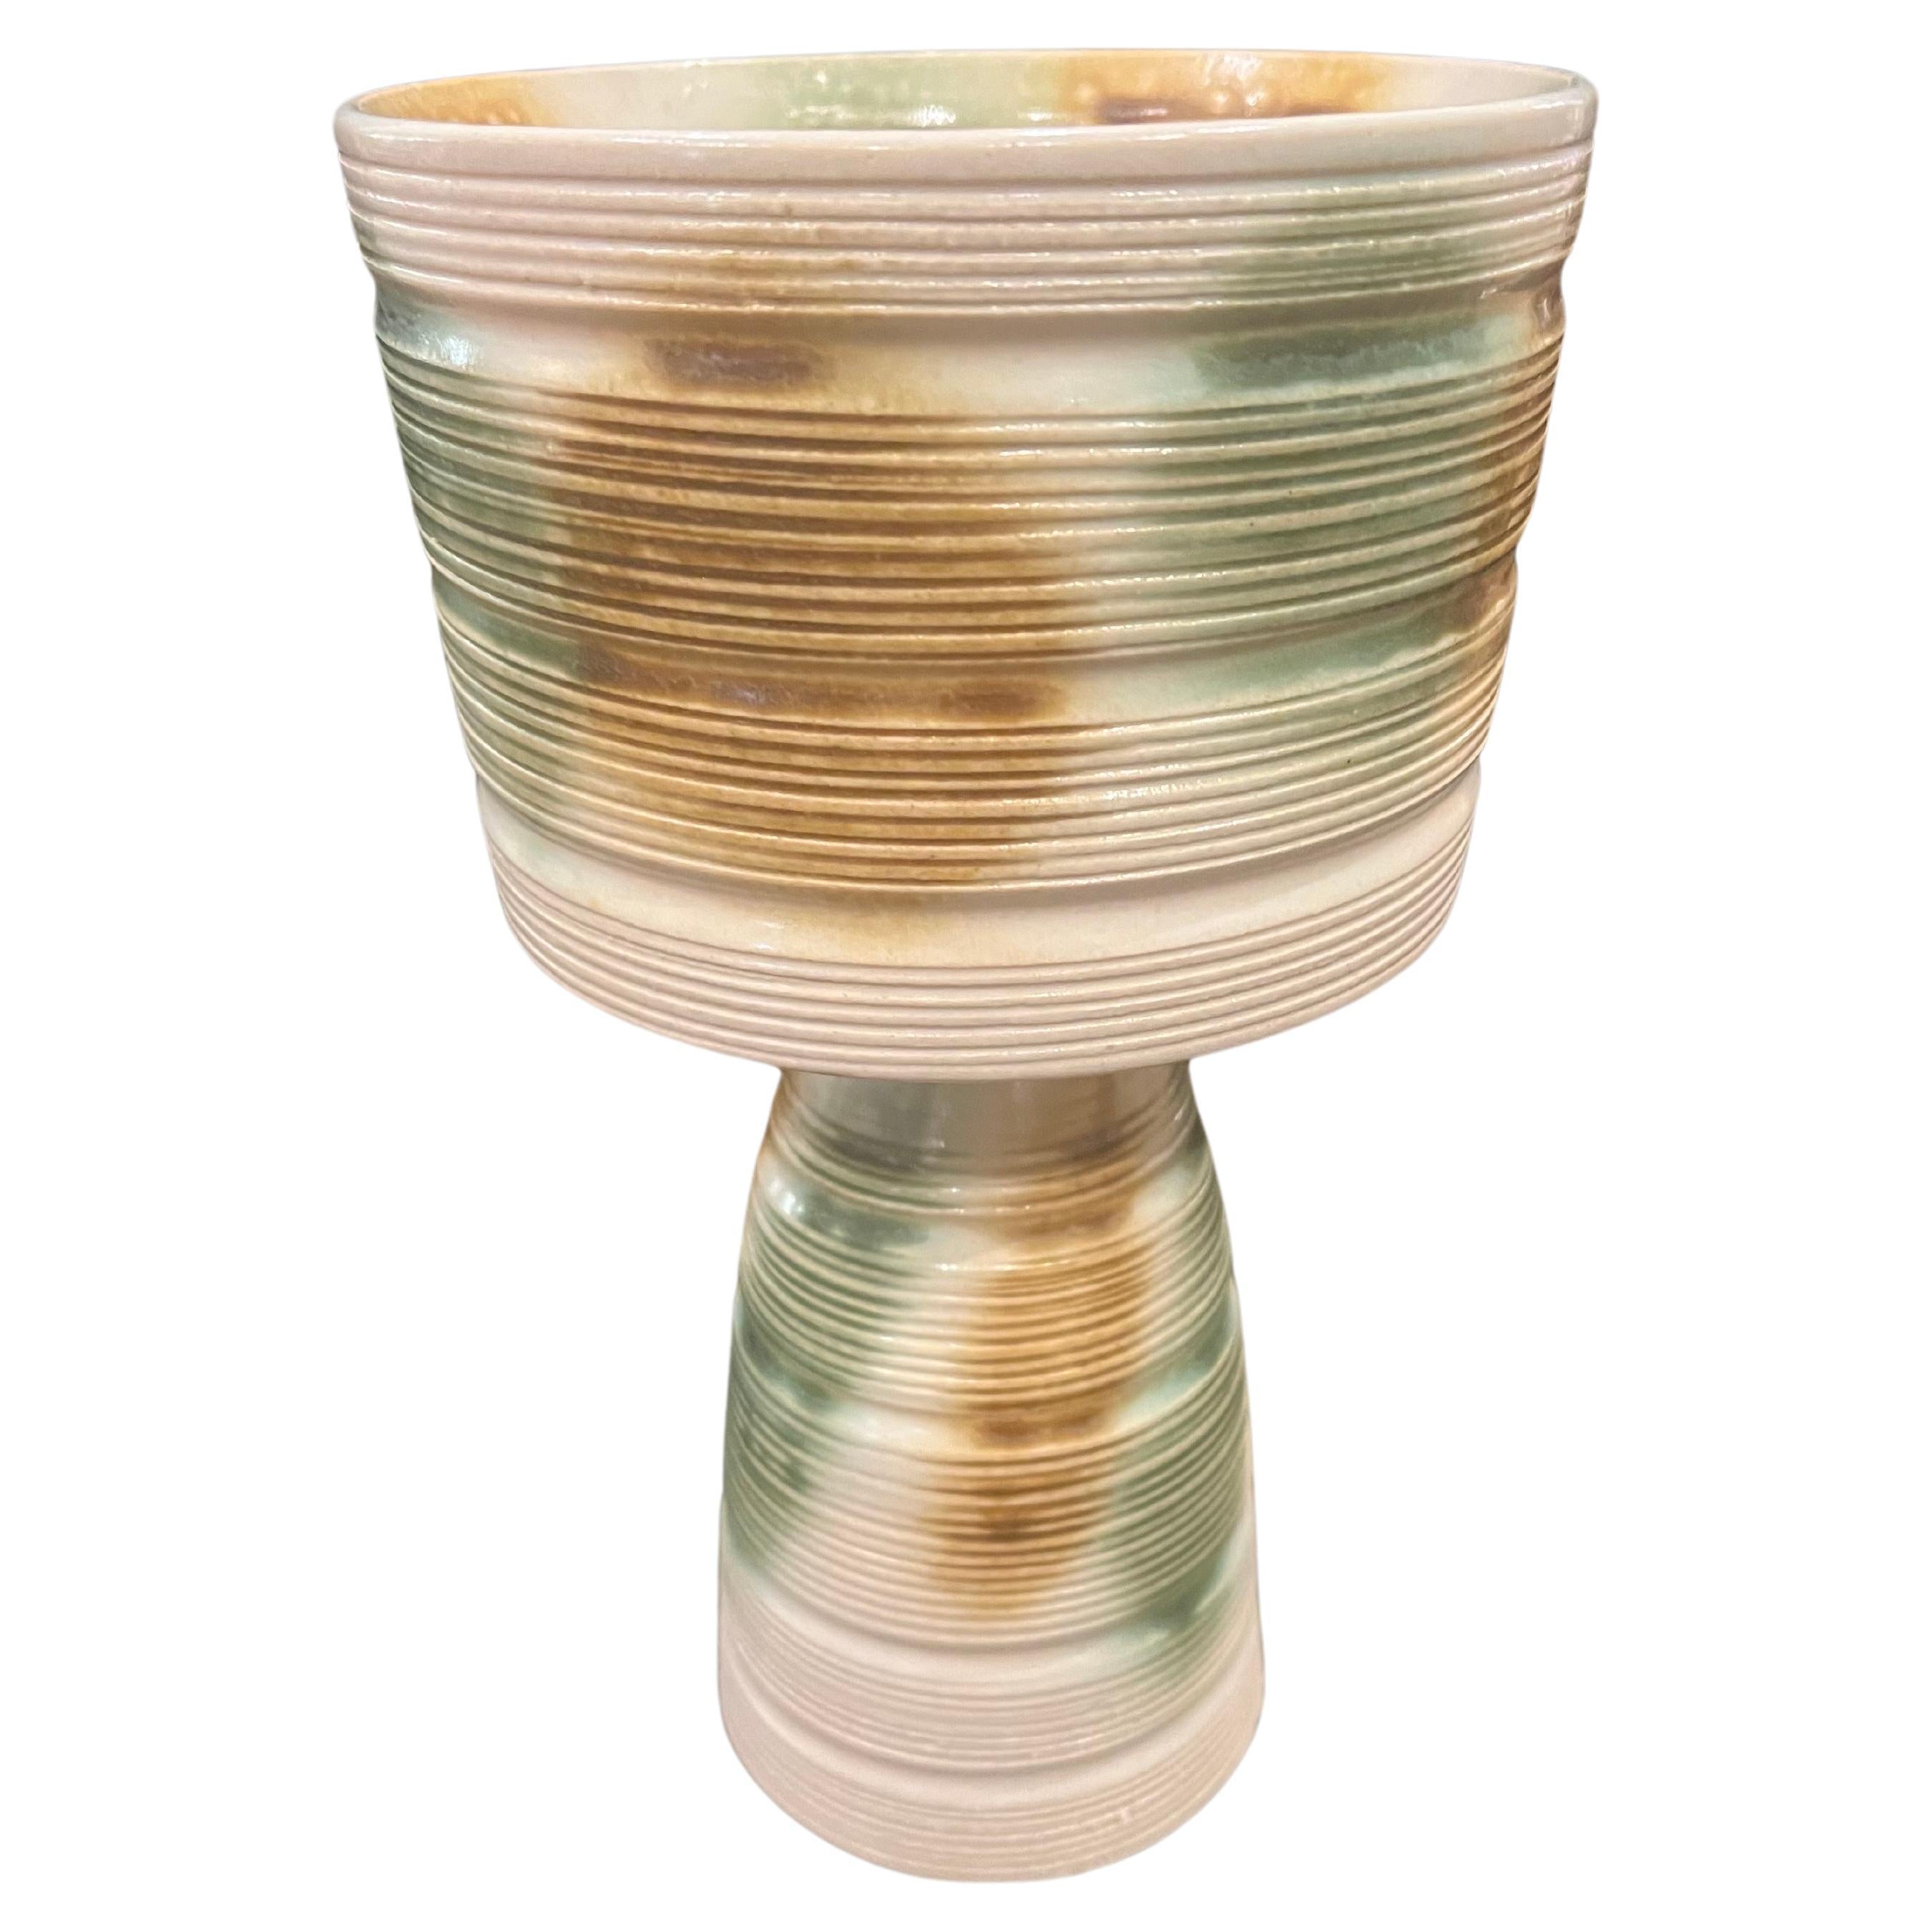 Beautiful earth tones color glaze, design, and shape on this ceramic, shape Ikebana bowl or planter.